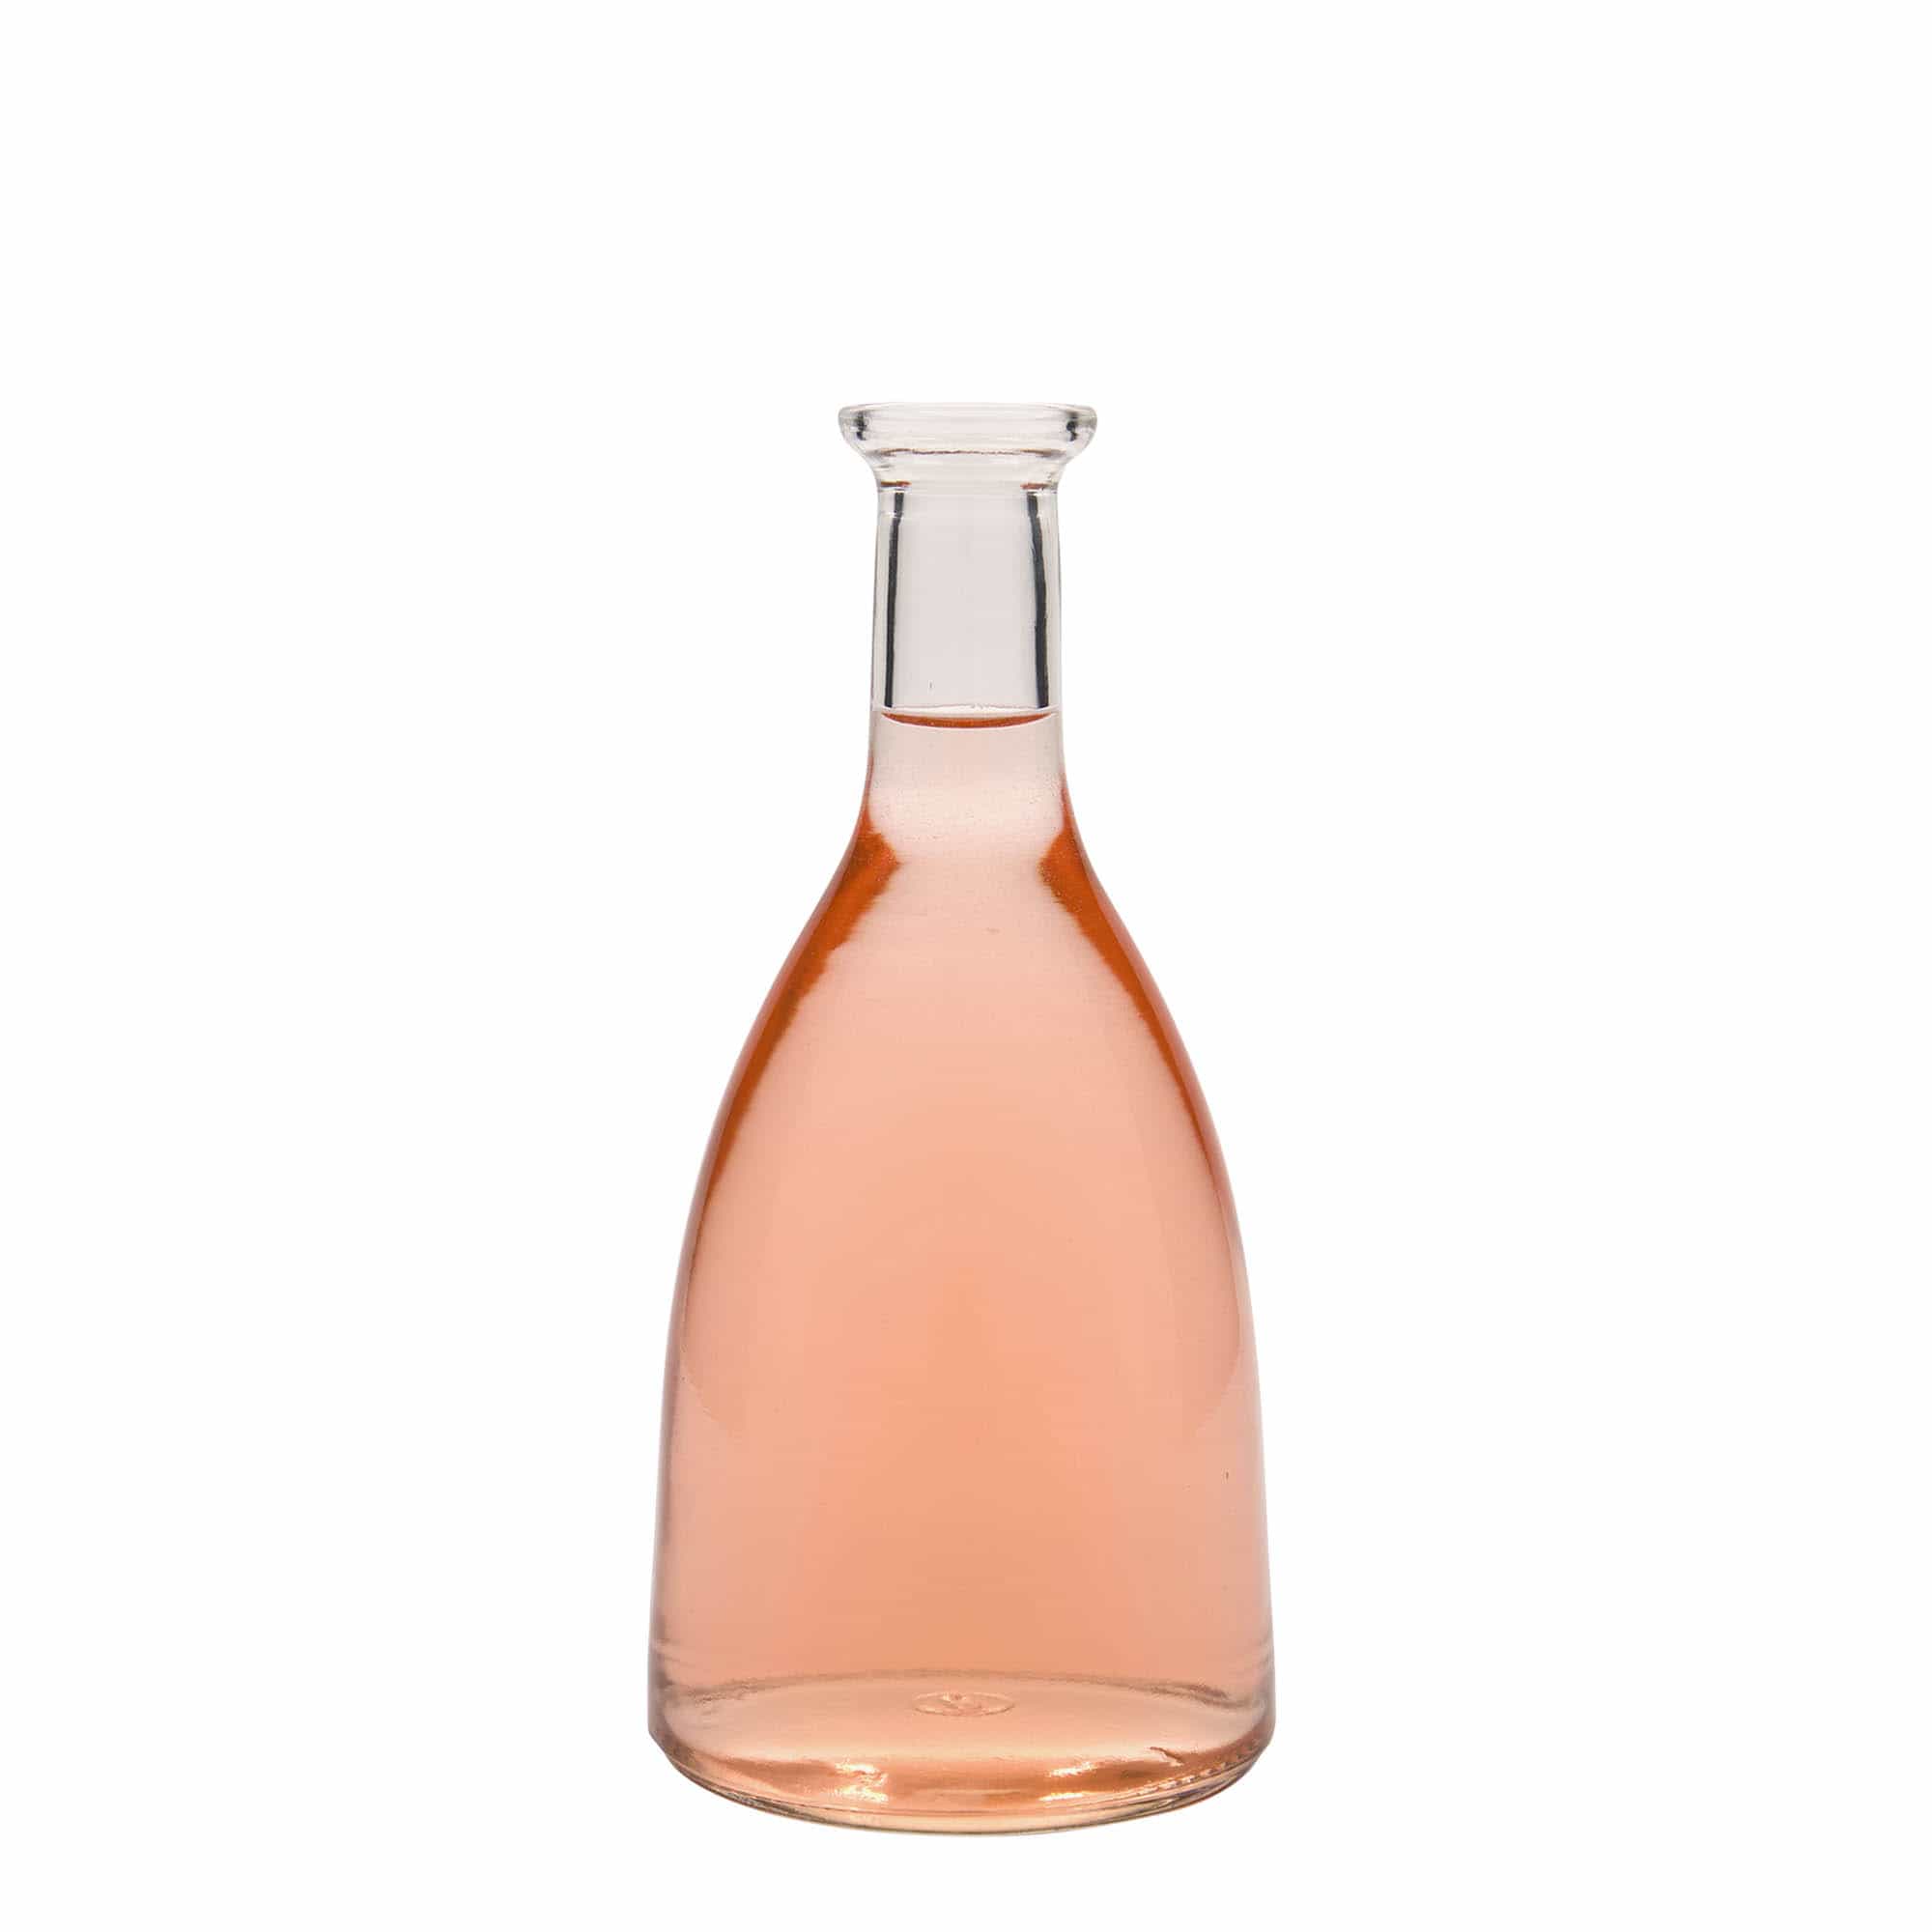 500 ml glass bottle 'Viola', closure: cork